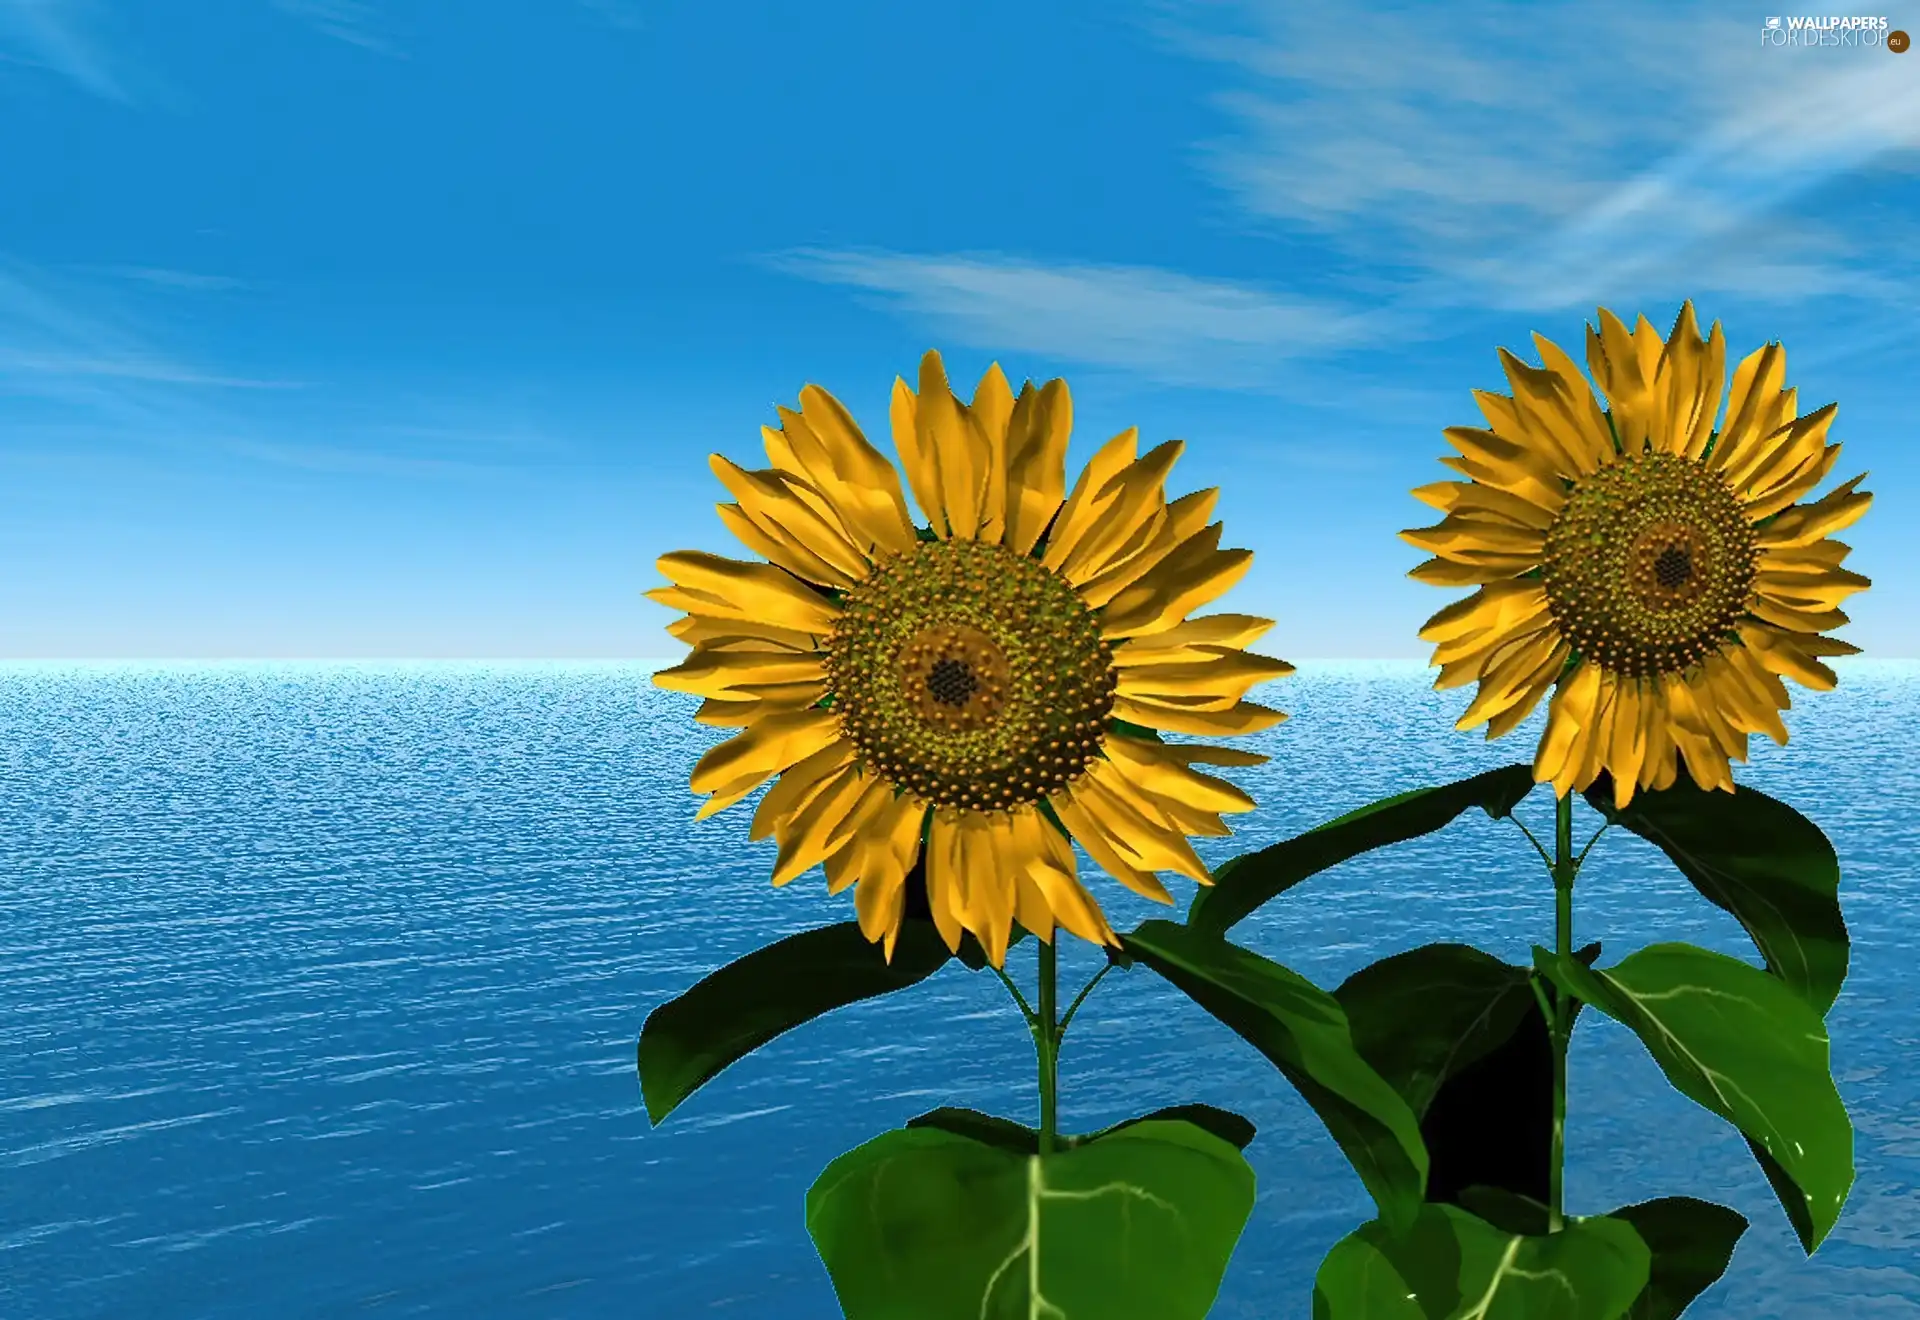 graphics, Computer, sea, Nice sunflowers, Sky